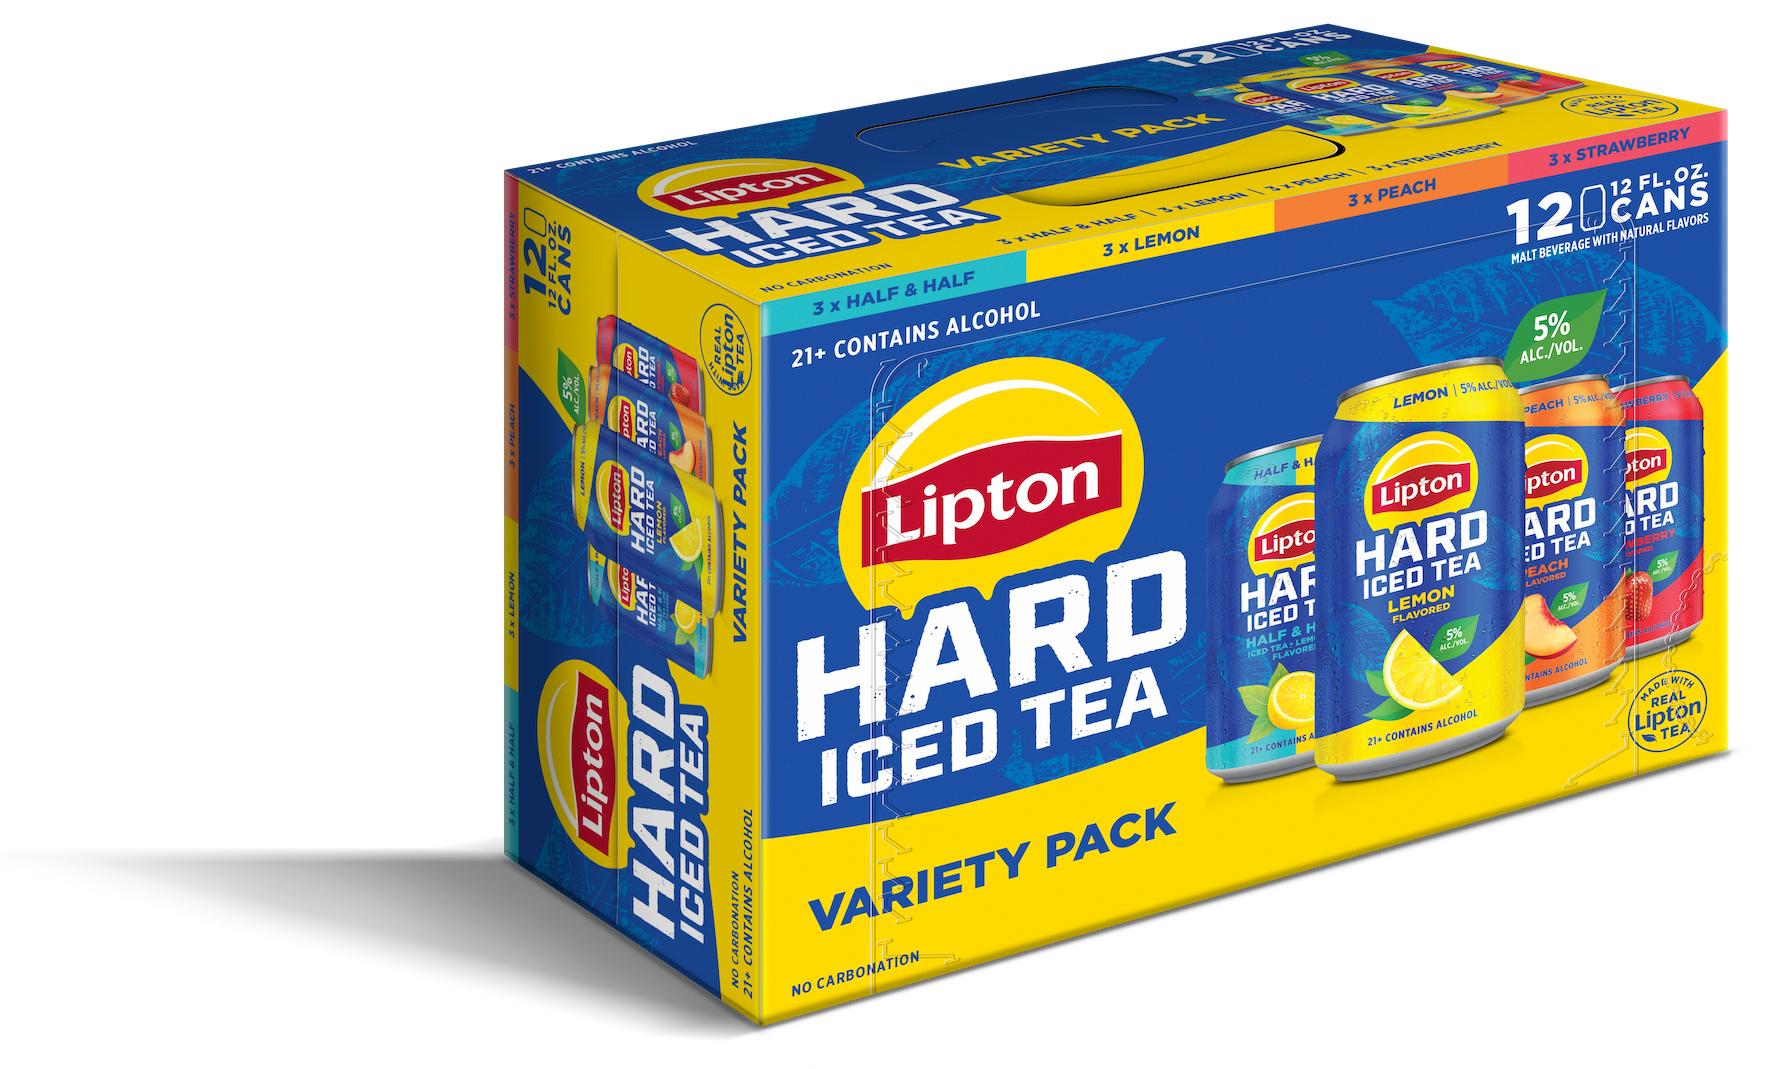 Lipton Hard Iced Tea graphic revolving around LHIT Lemon cans and some lemon graphics